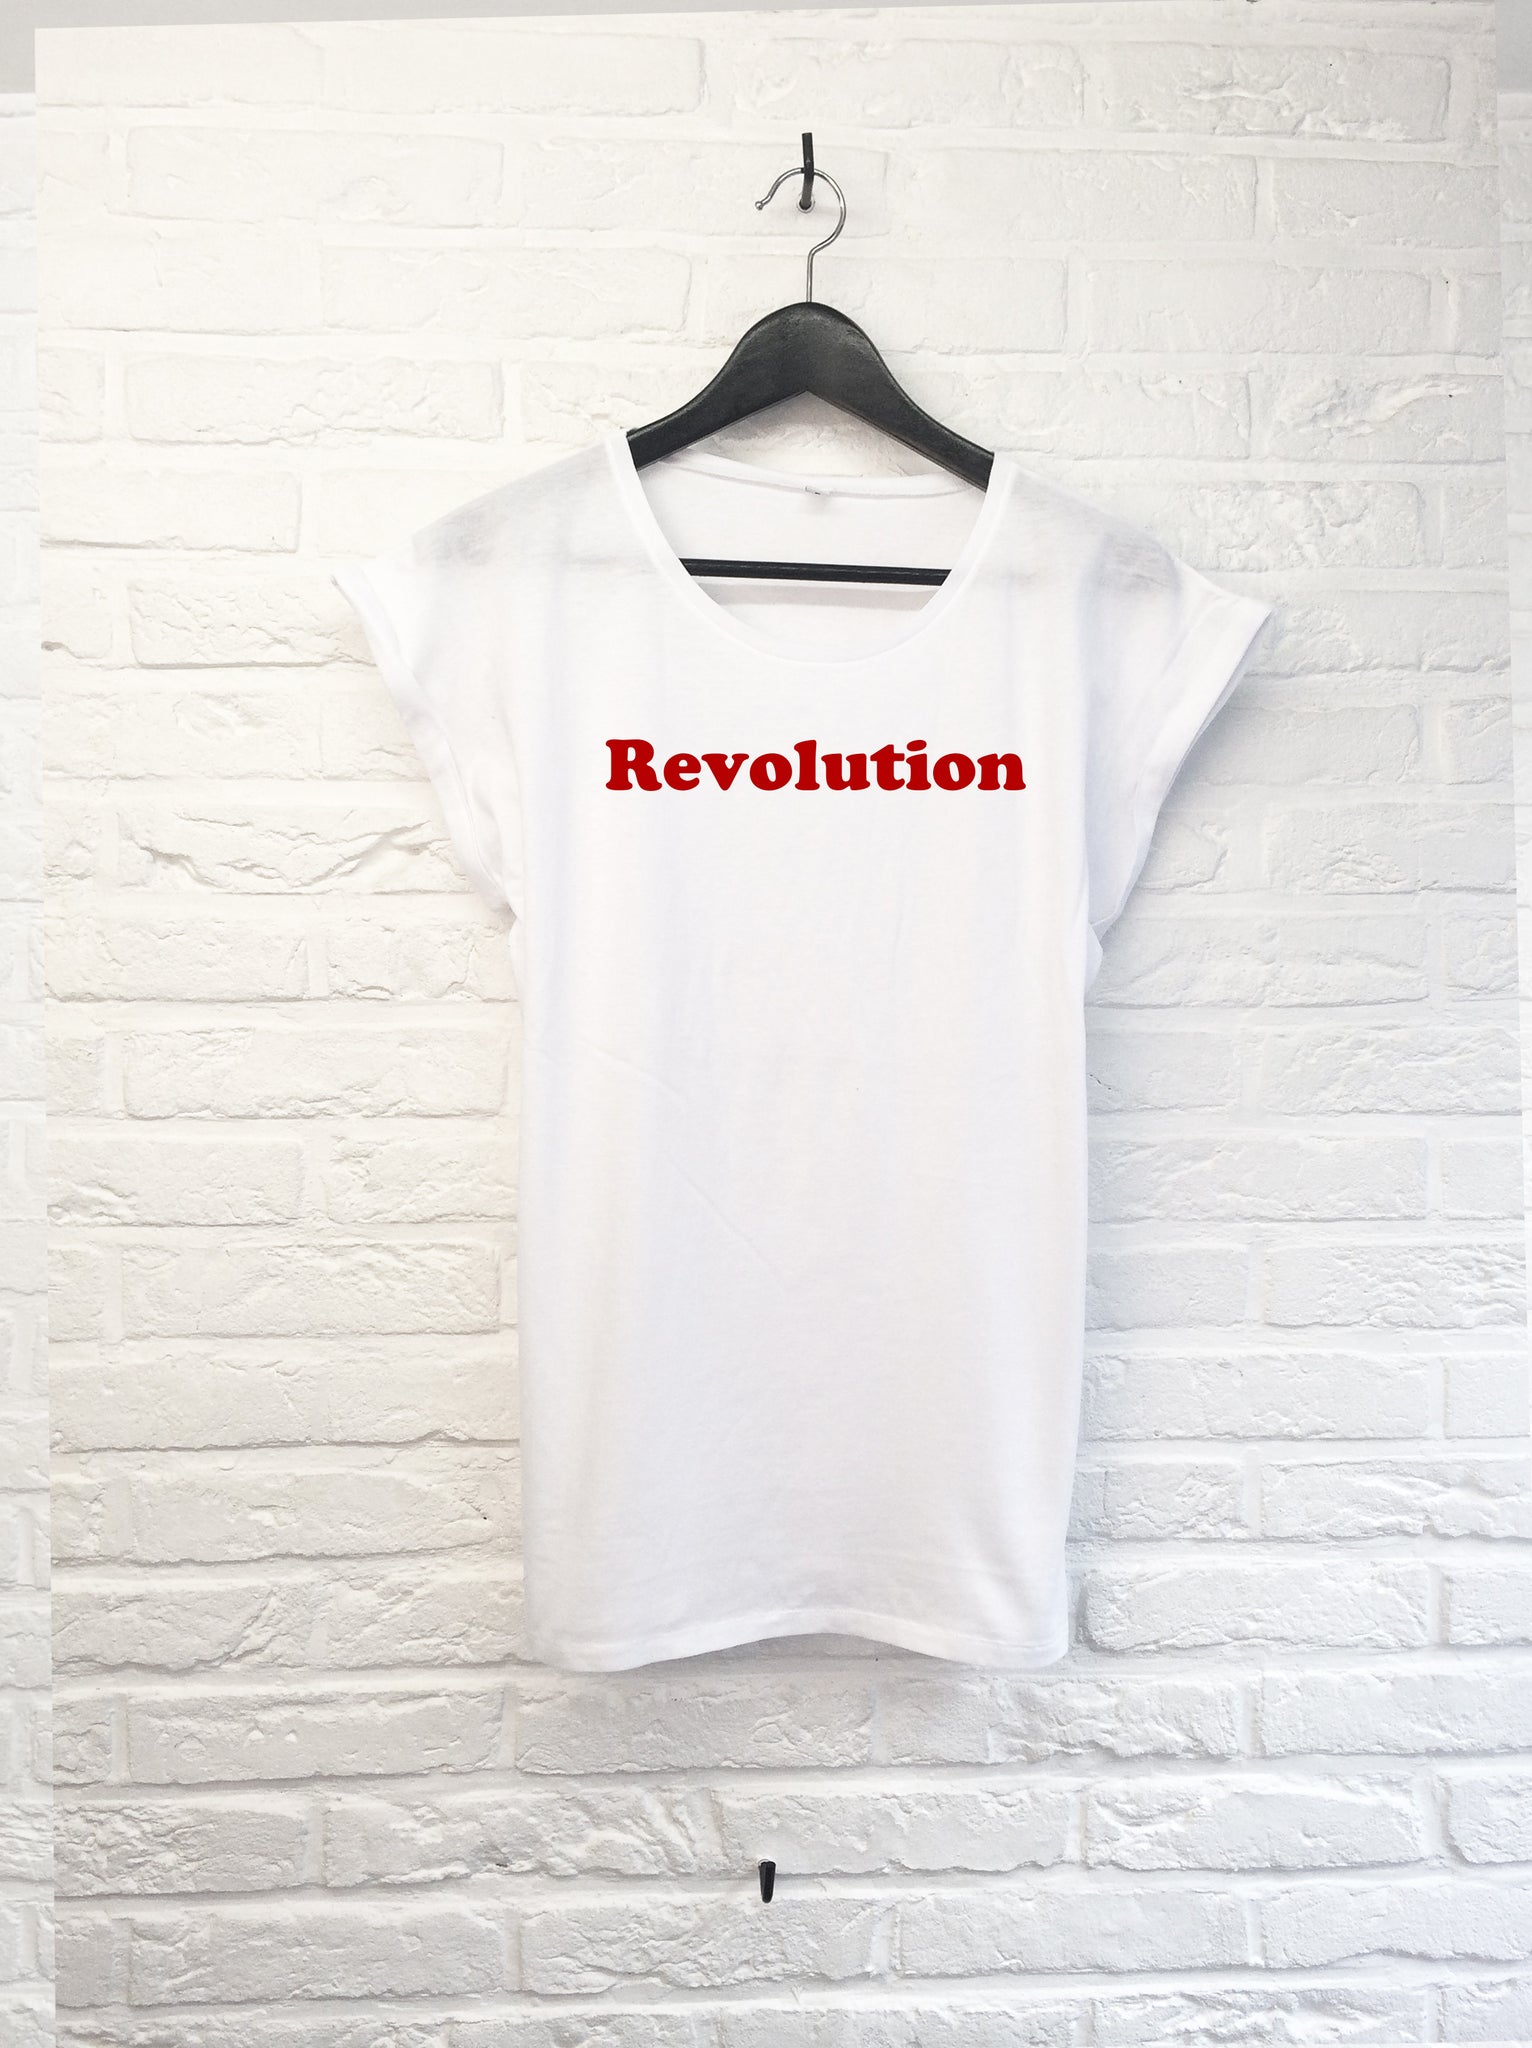 Revolution - Femme-T shirt-Atelier Amelot